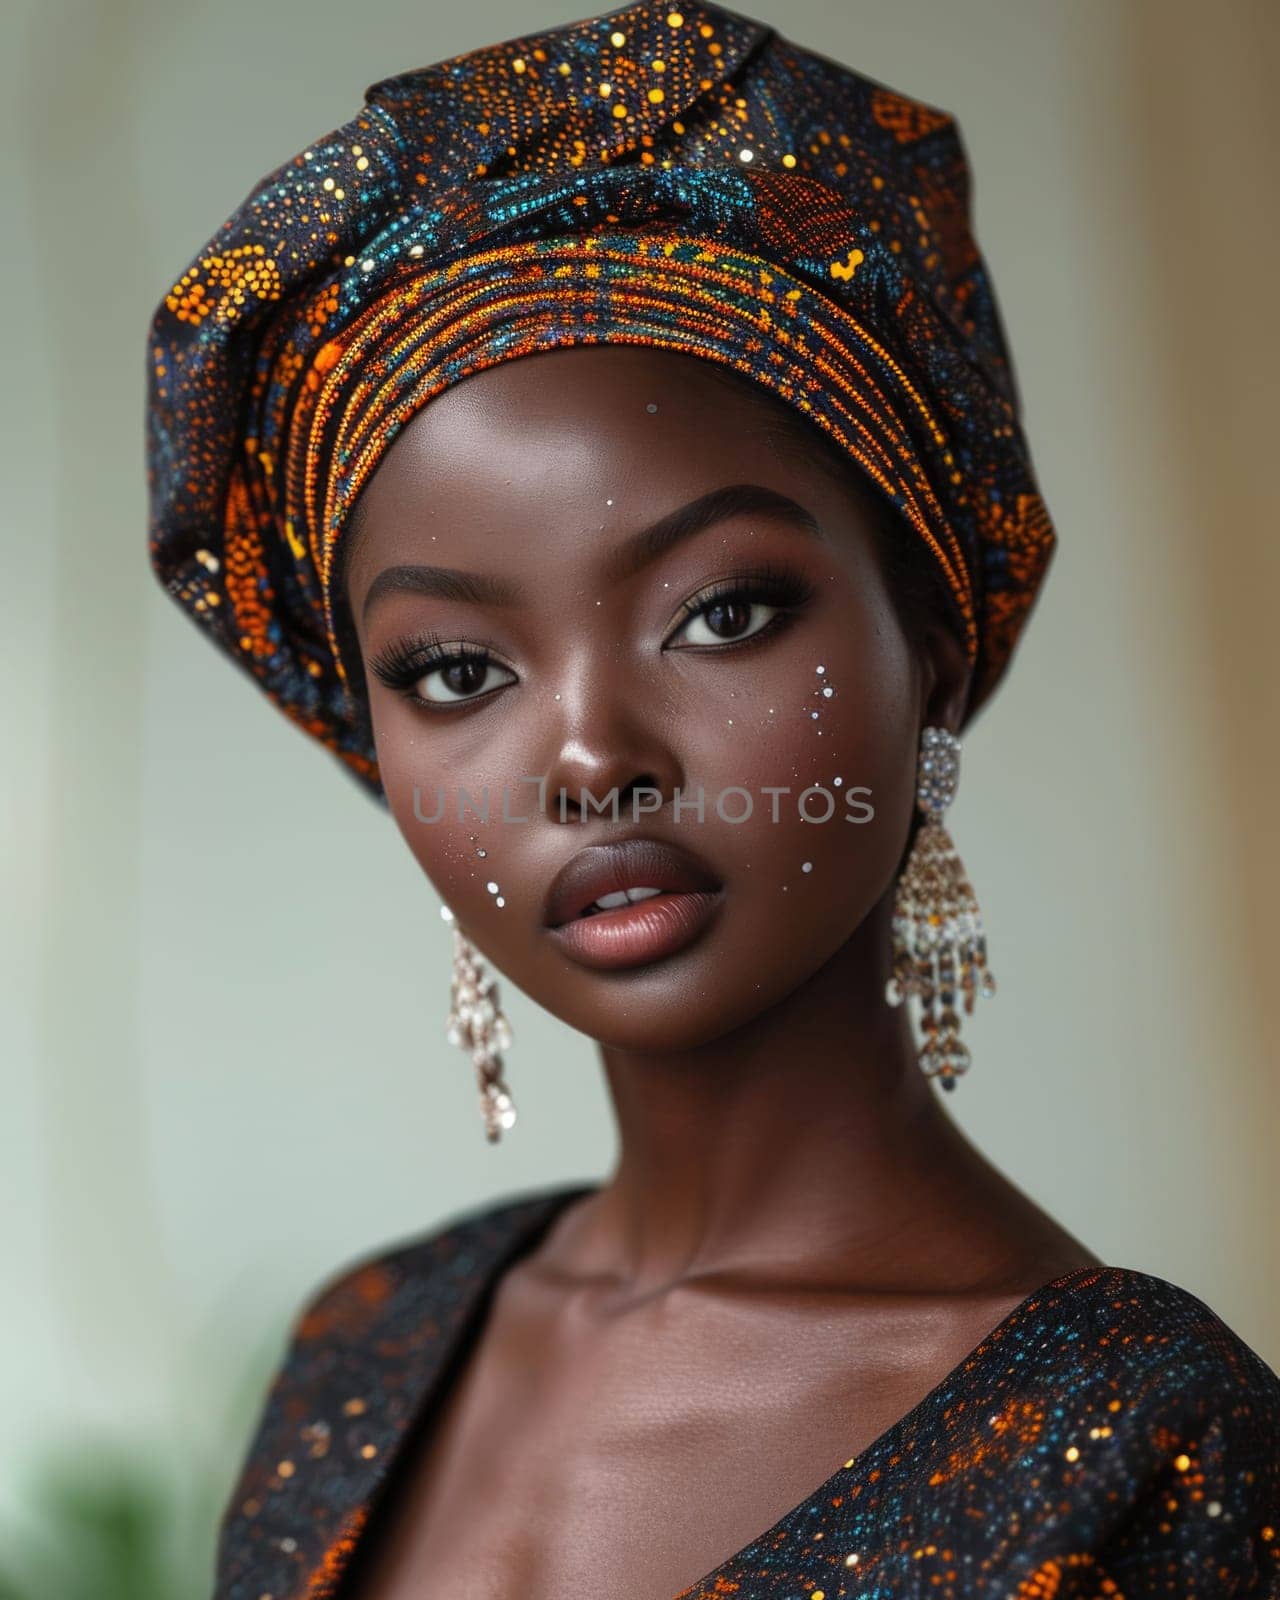 Elegant African American Woman in Impressive Turban in Portrait by Yurich32